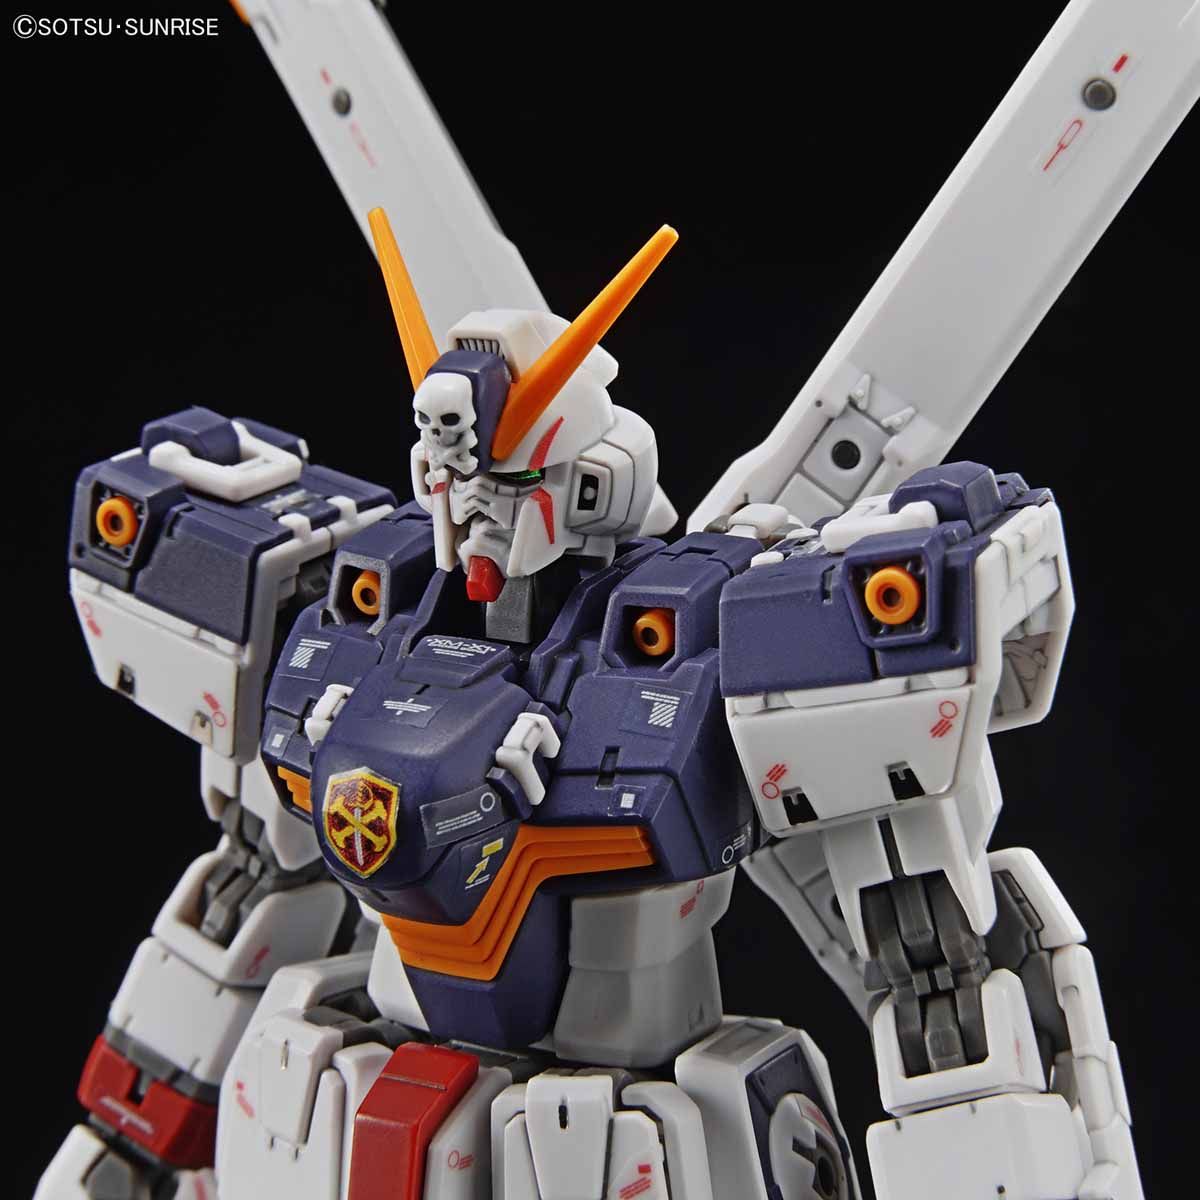 RG Crossbone Gundam X1